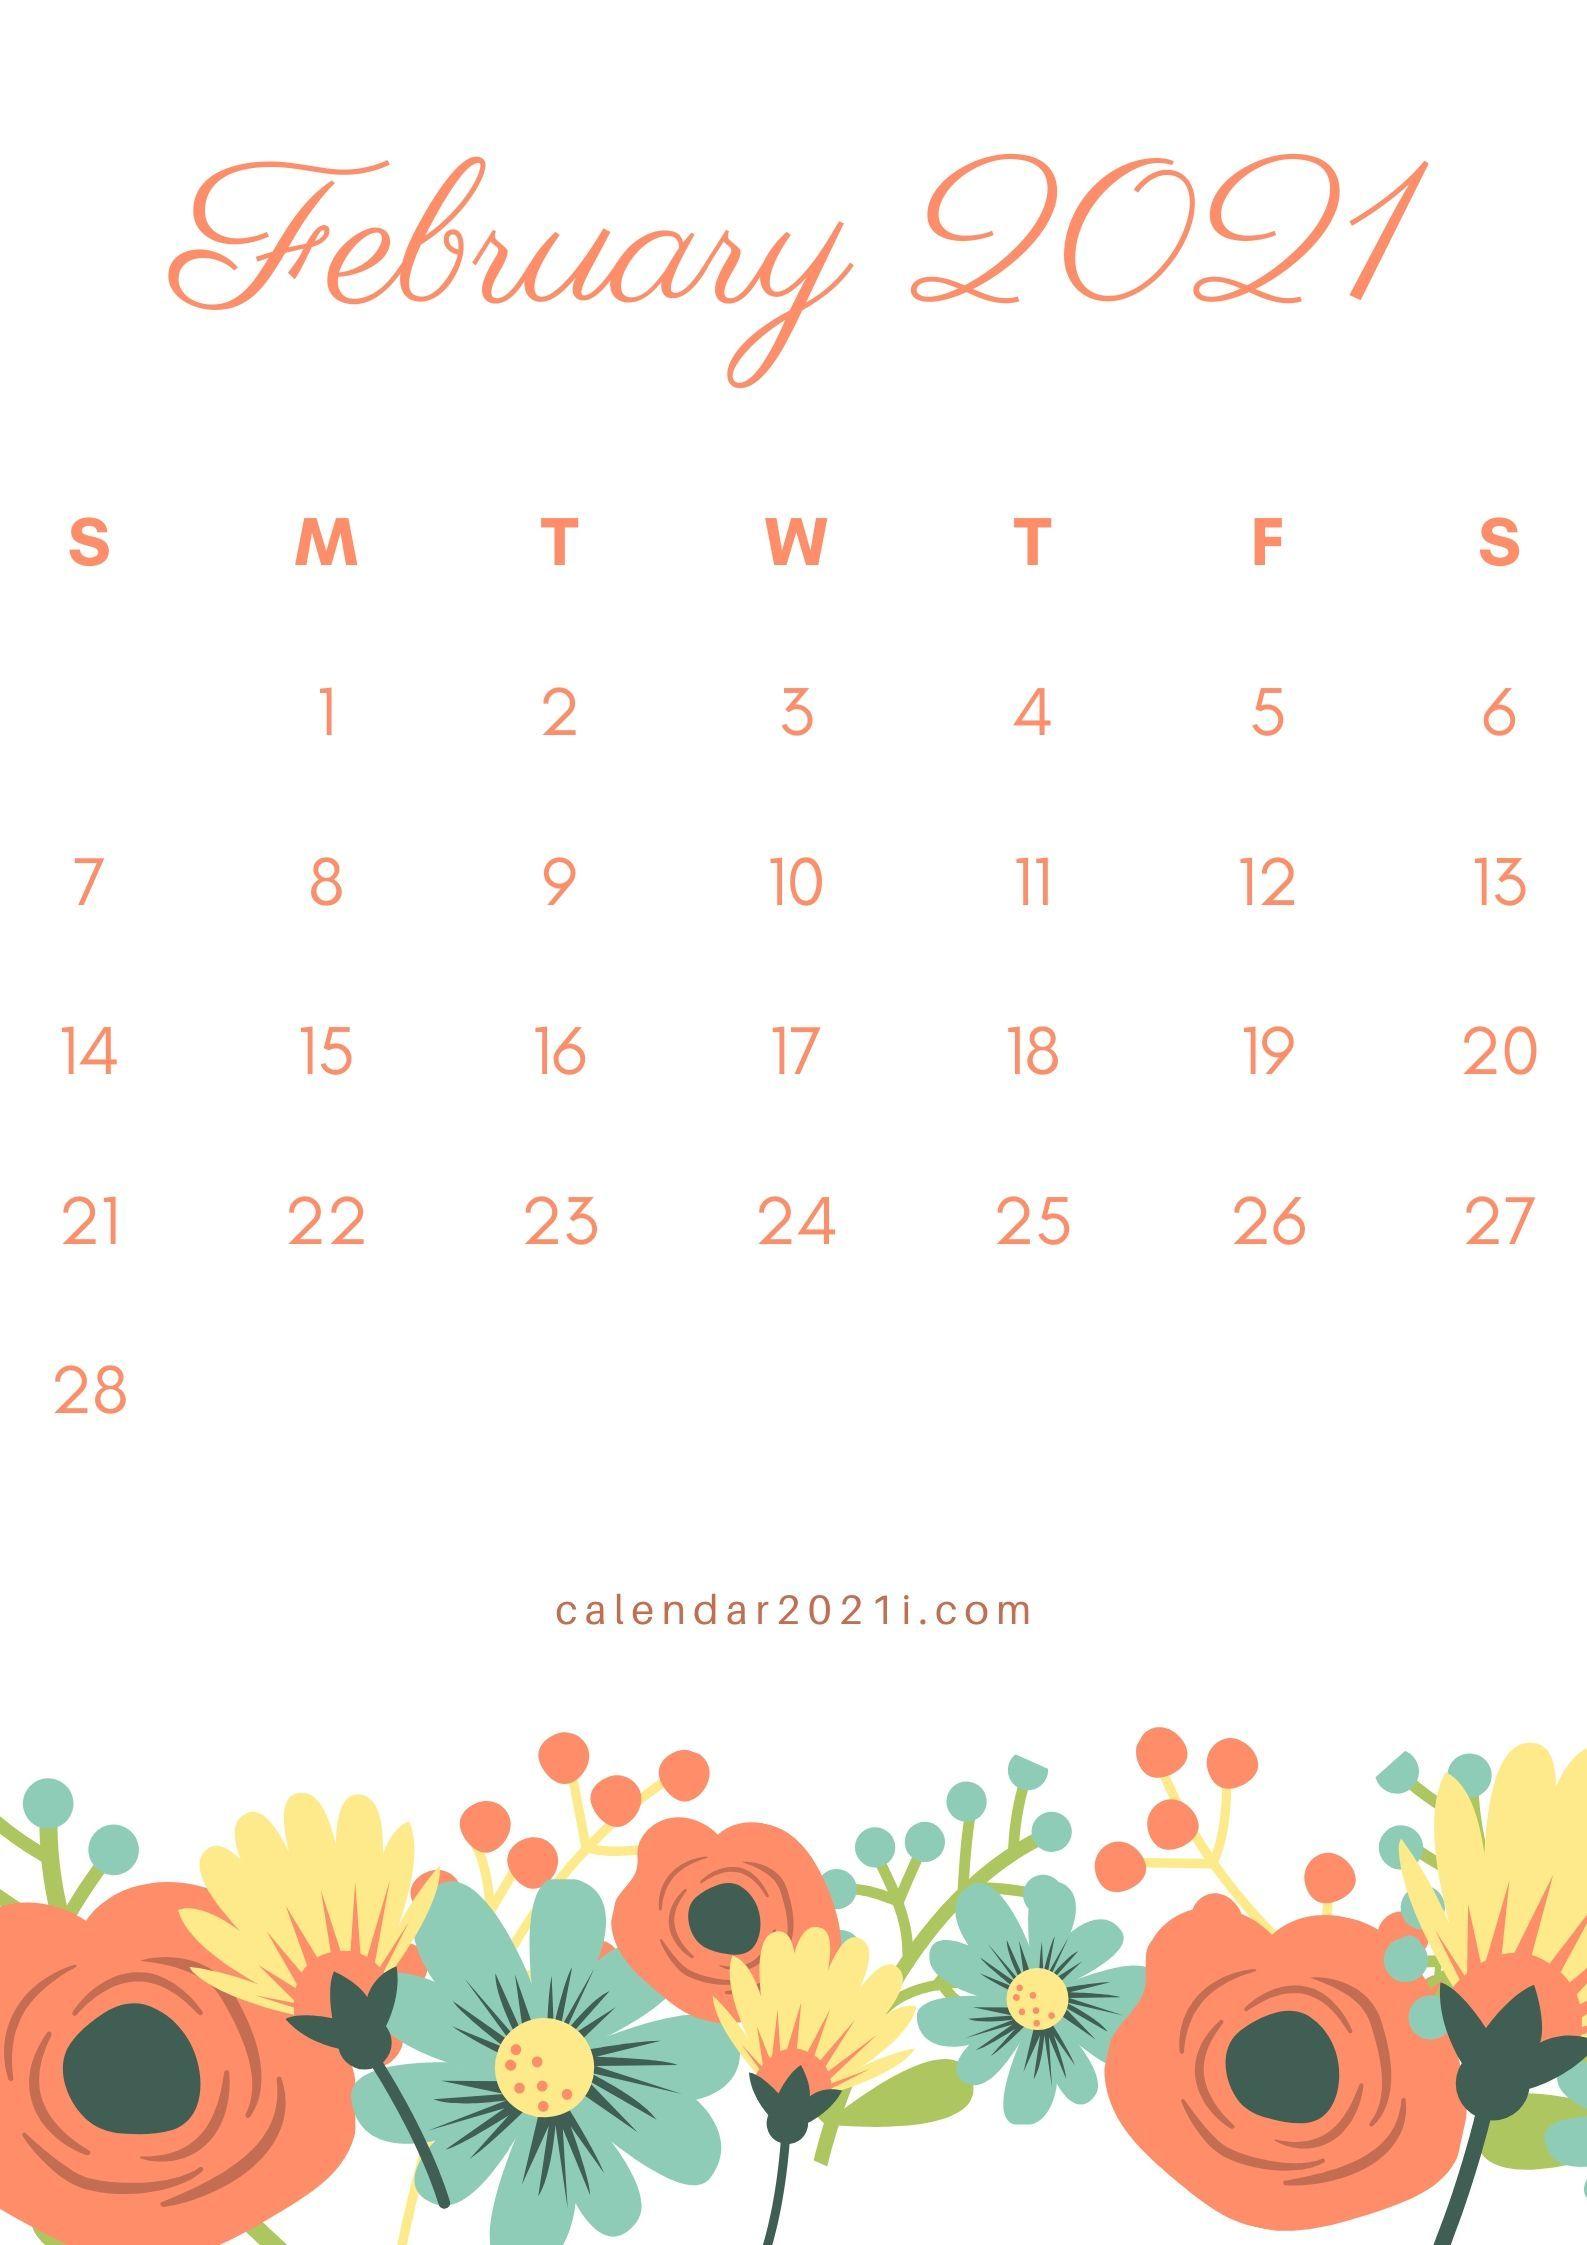 February 2021 Calendar Wallpapers Top Free February 2021 Calendar Backgrounds Wallpaperaccess